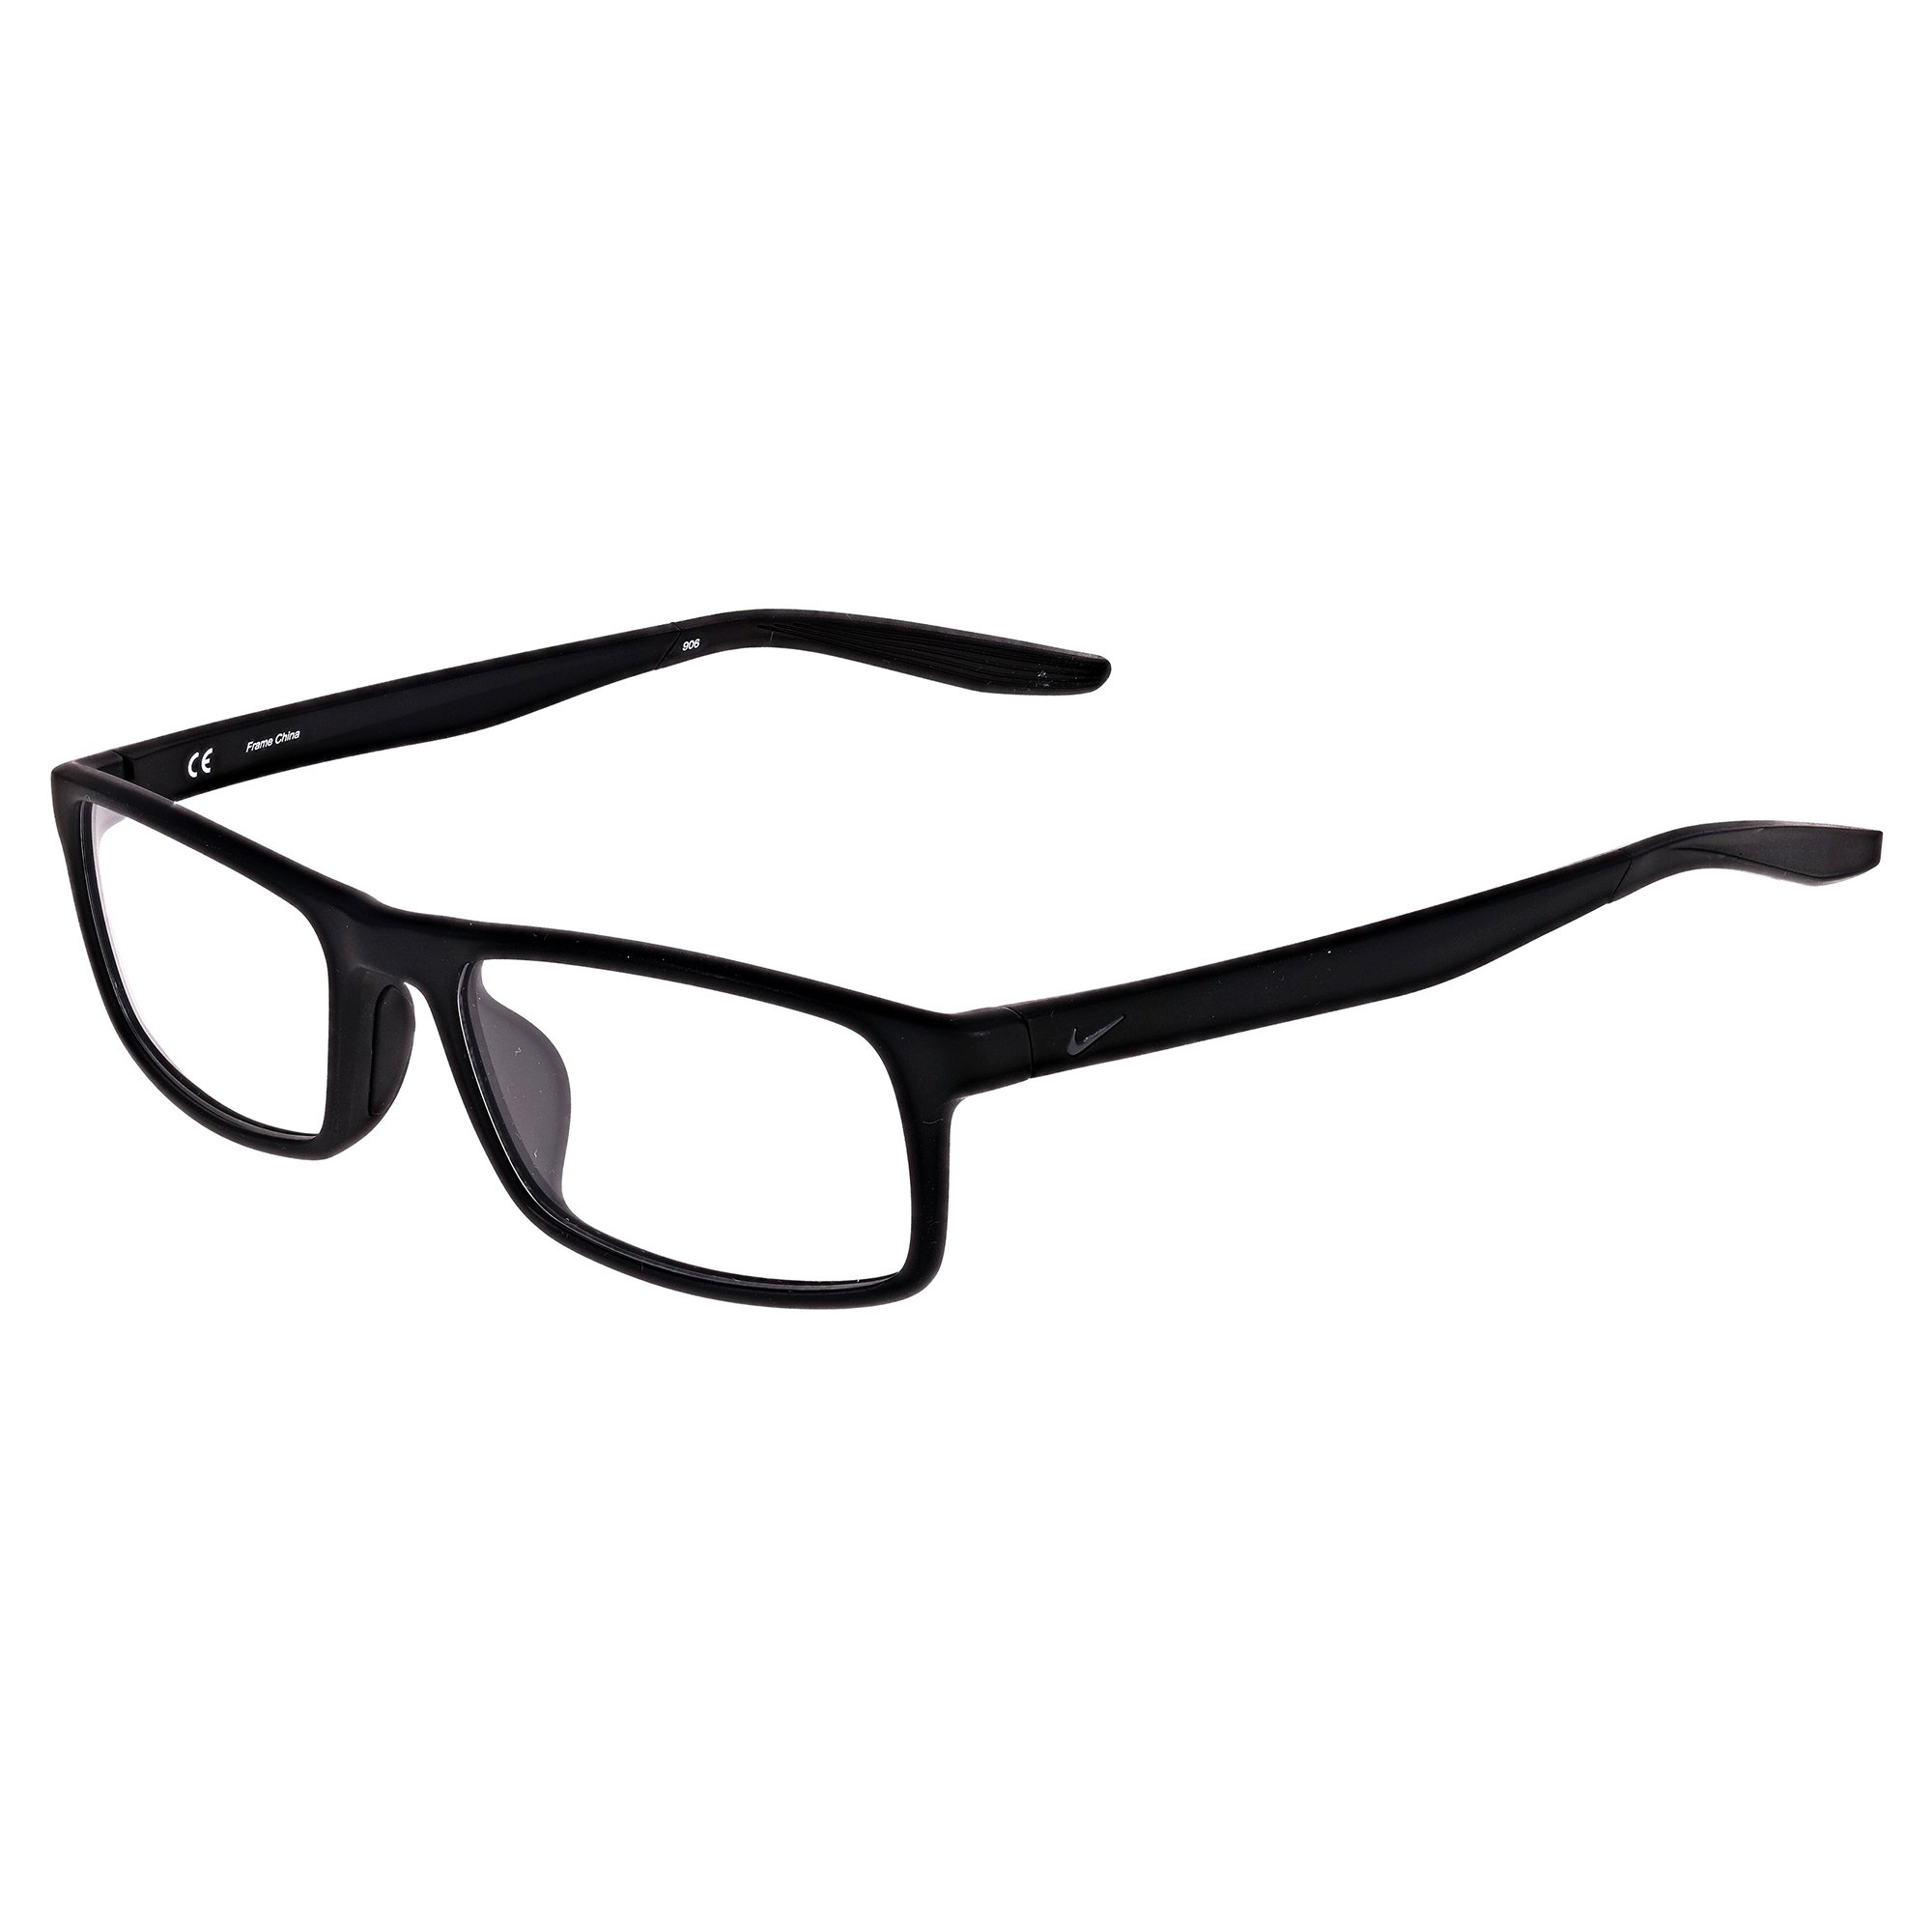 Black Nose Pads for Nike Eye Glasses Eyeglasses Sunglasses Glasses Silicone